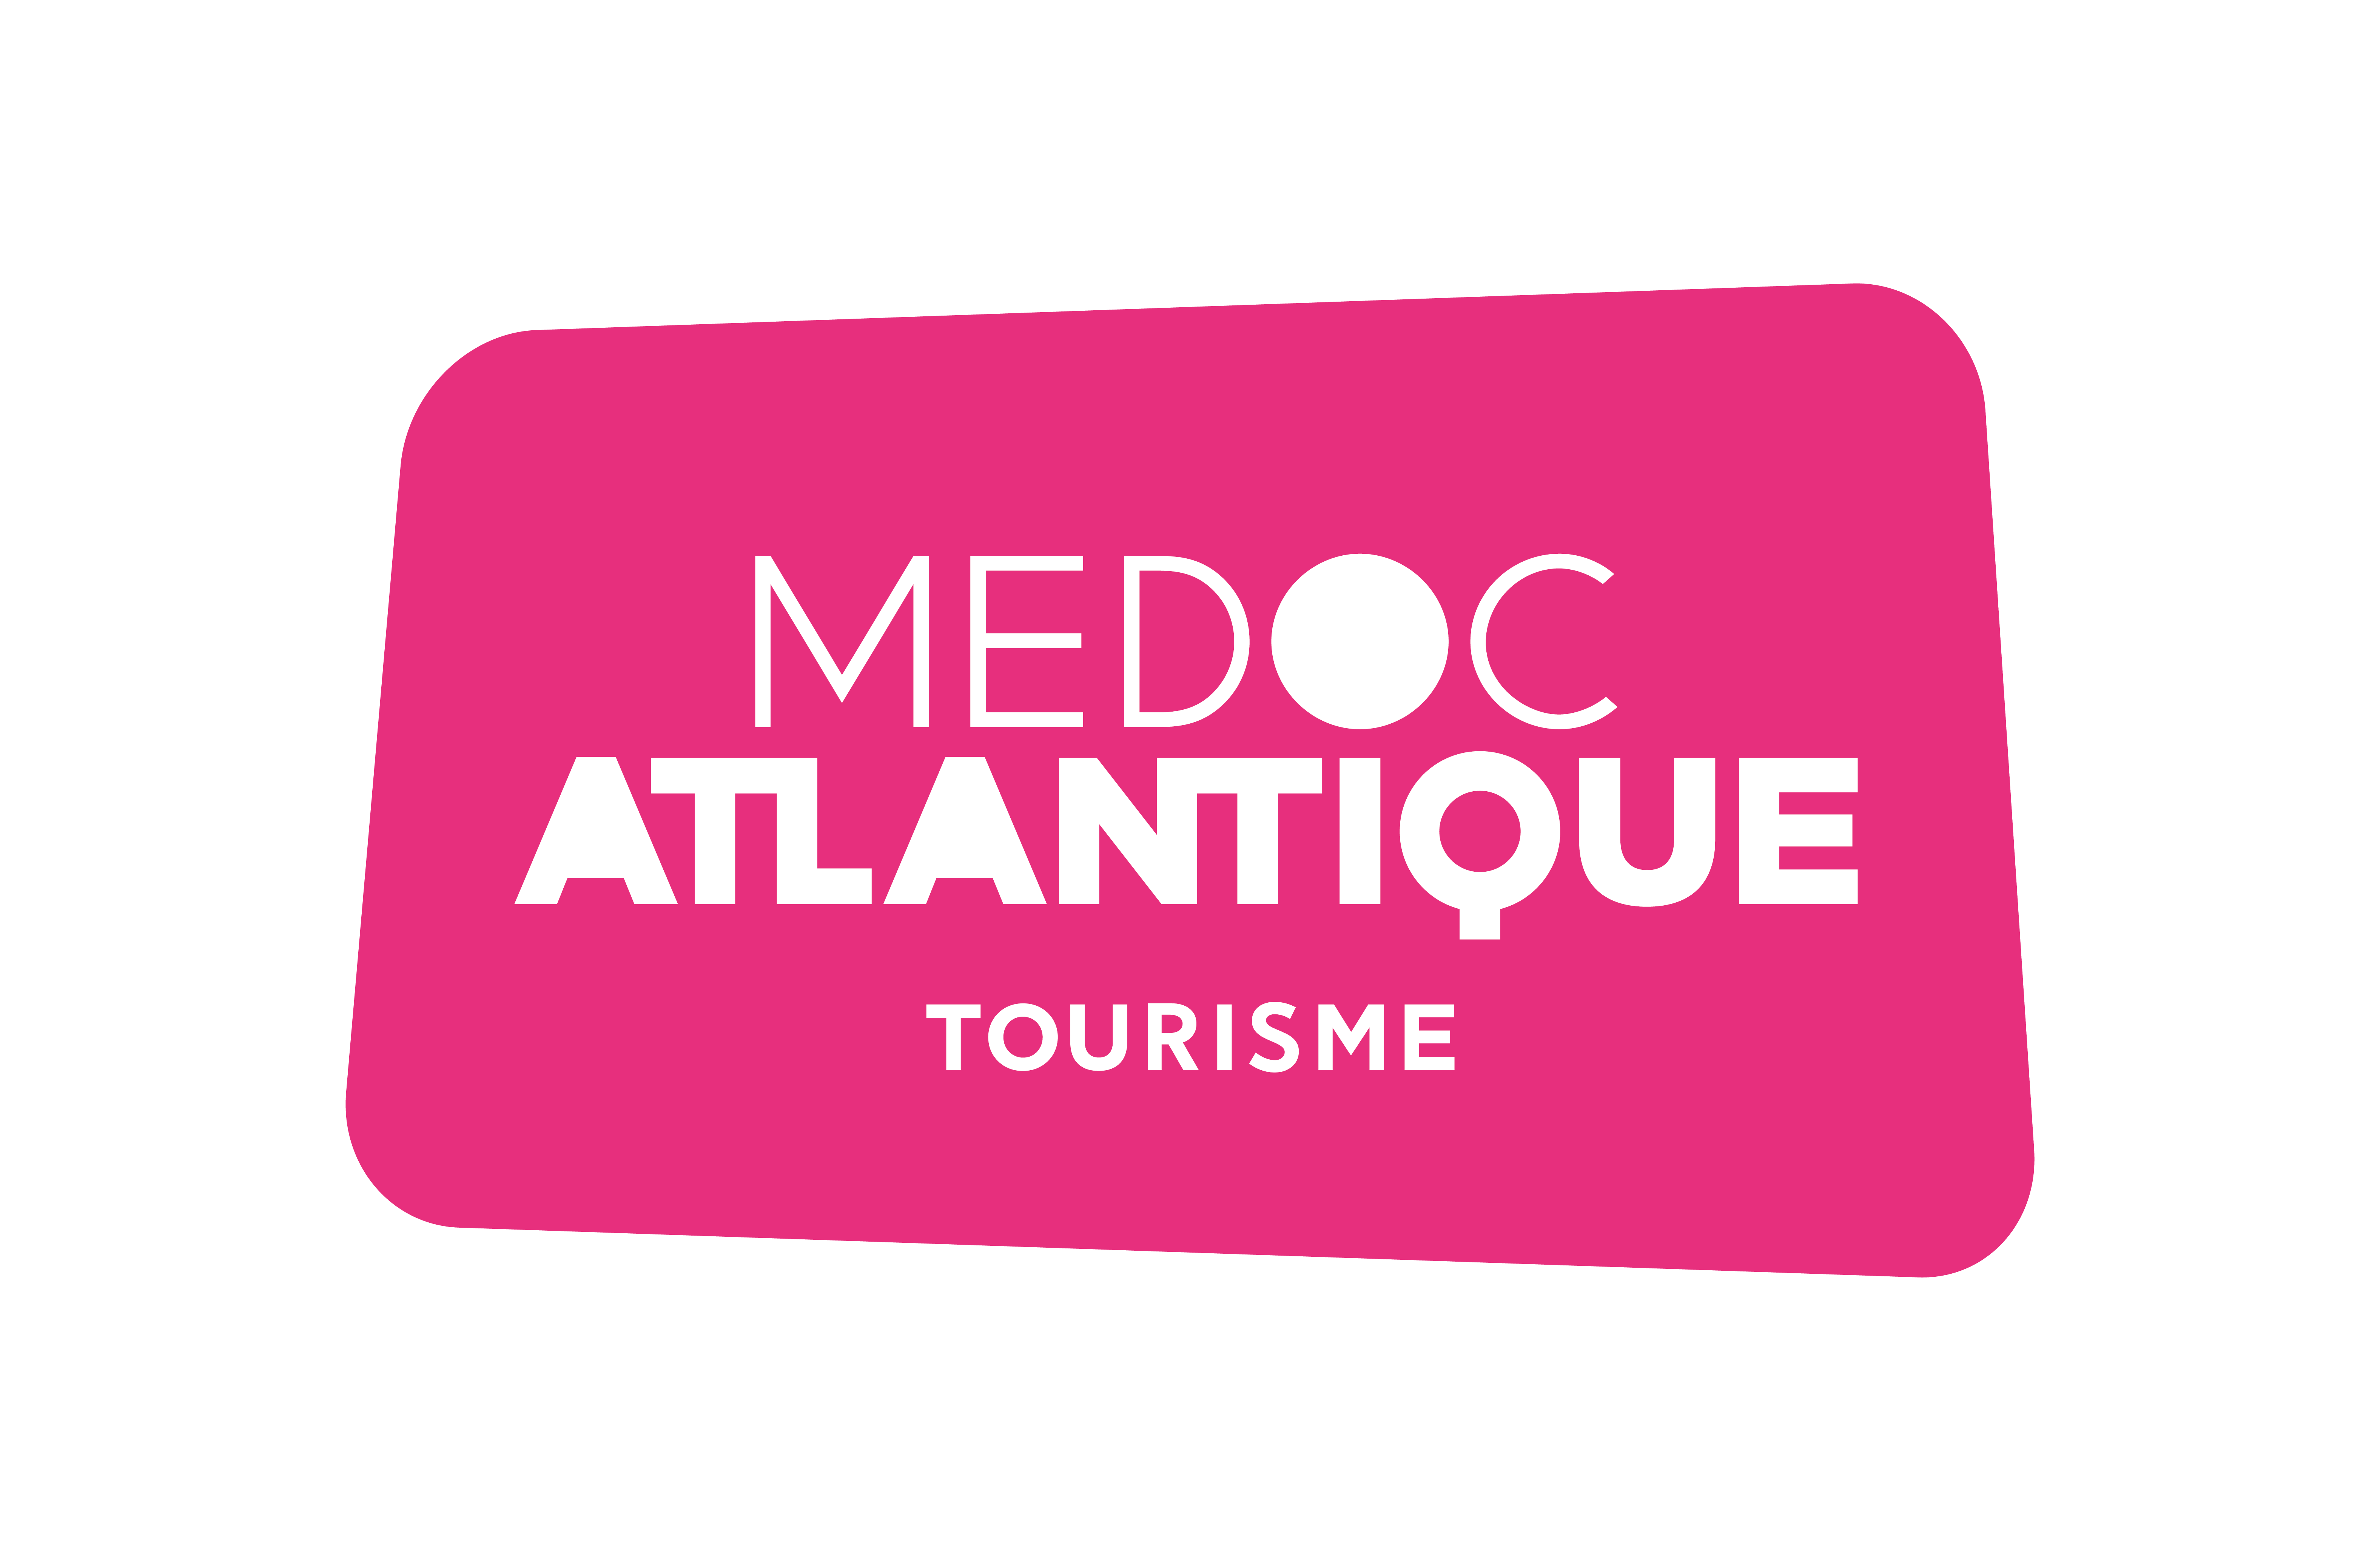 Medoc Atlantique